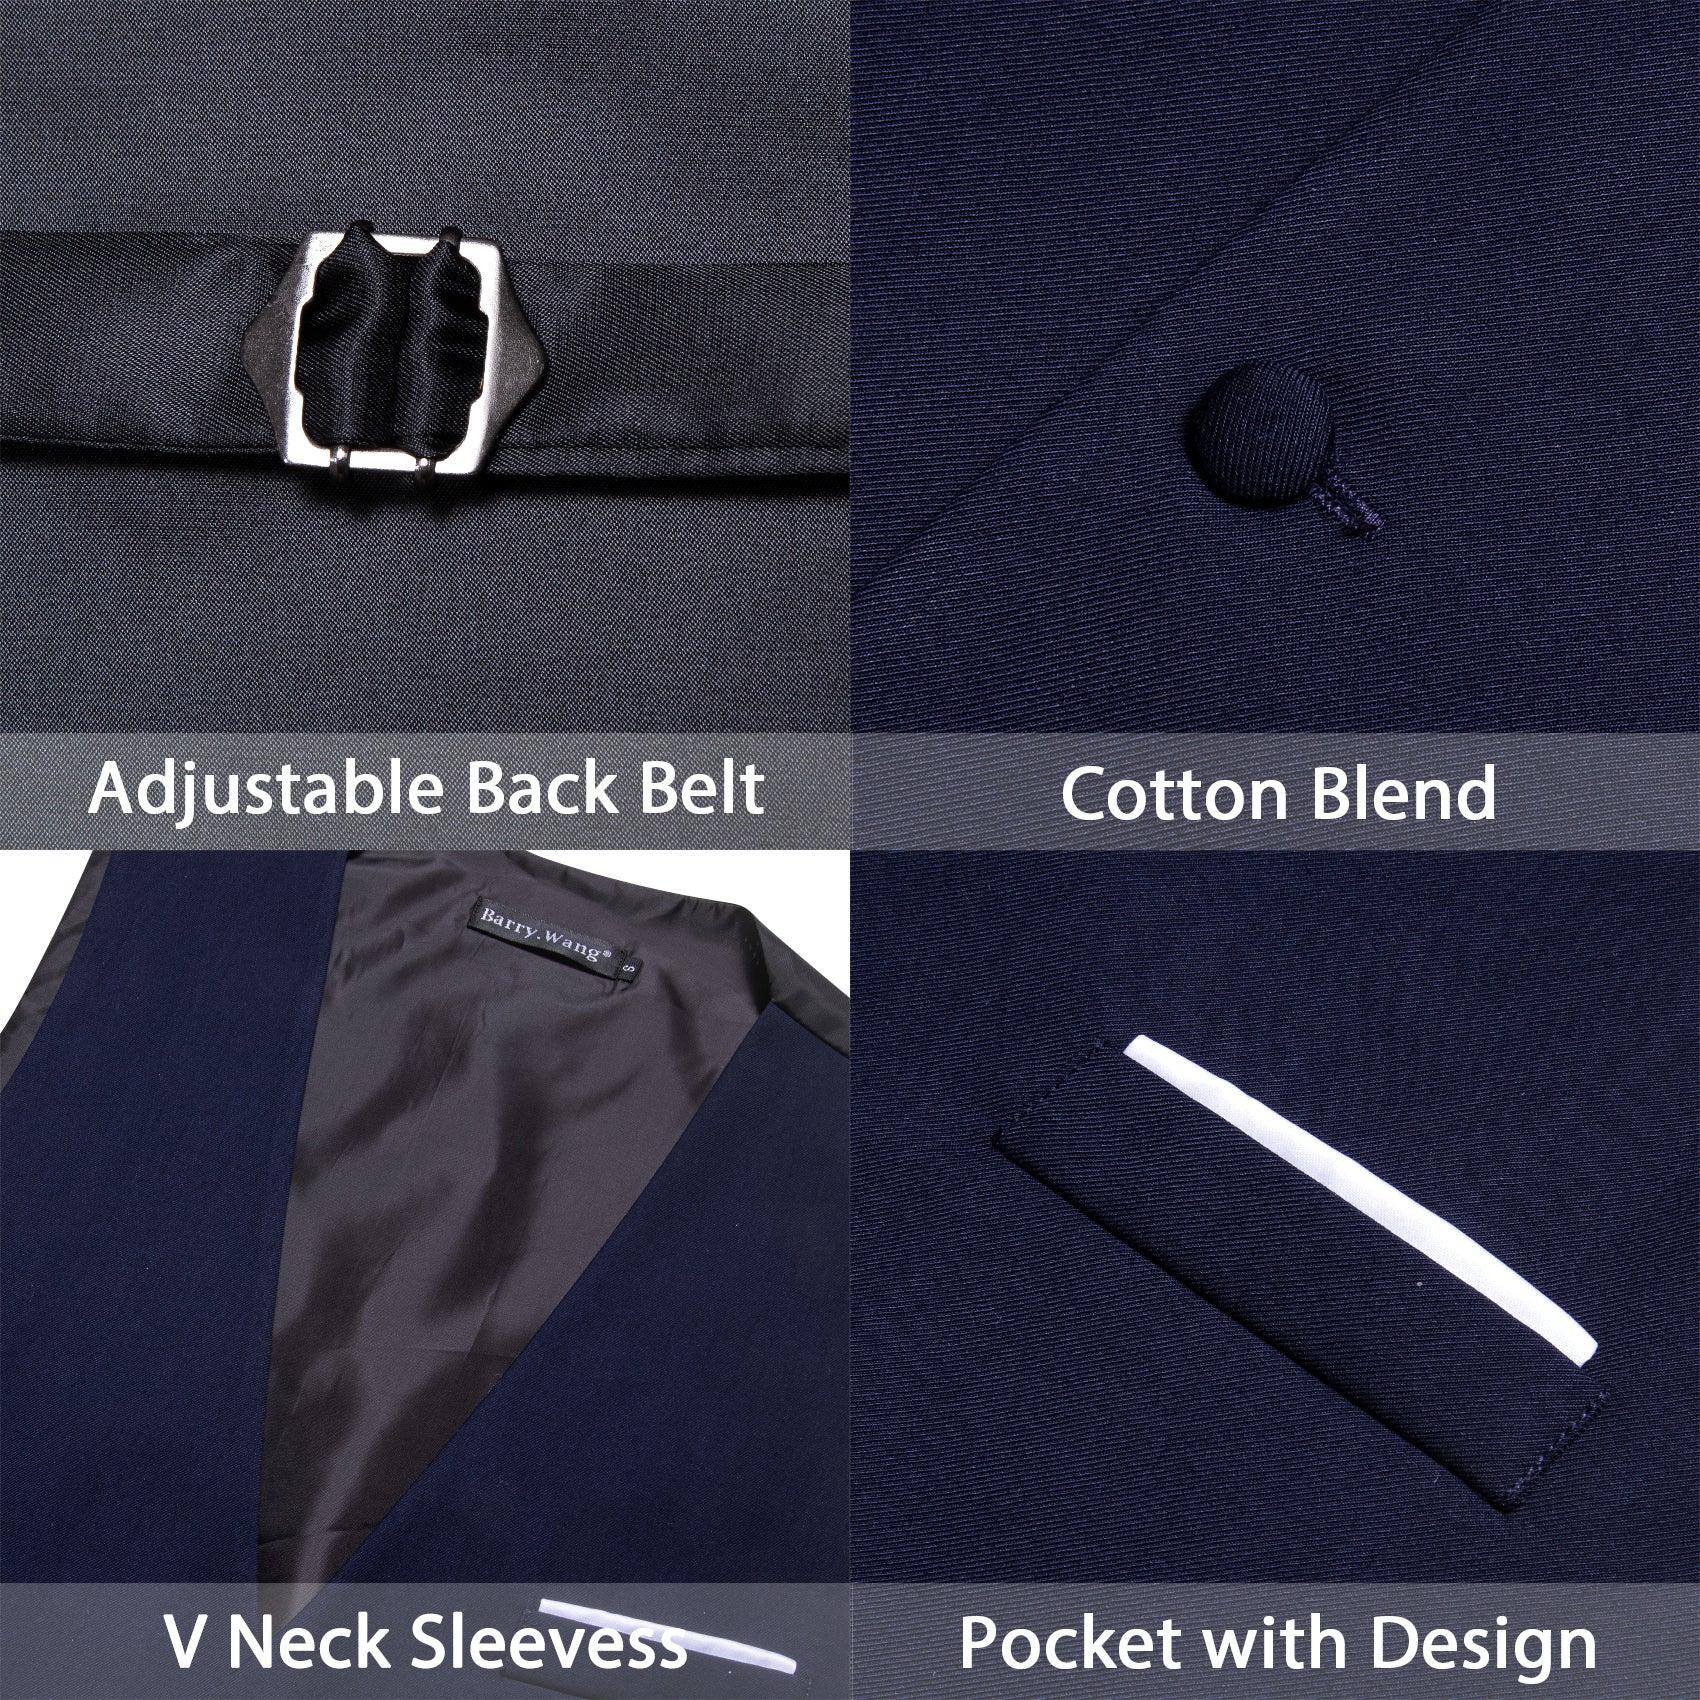 Men's Navy Blue Solid V-Neck Waistcoat Vest for Business